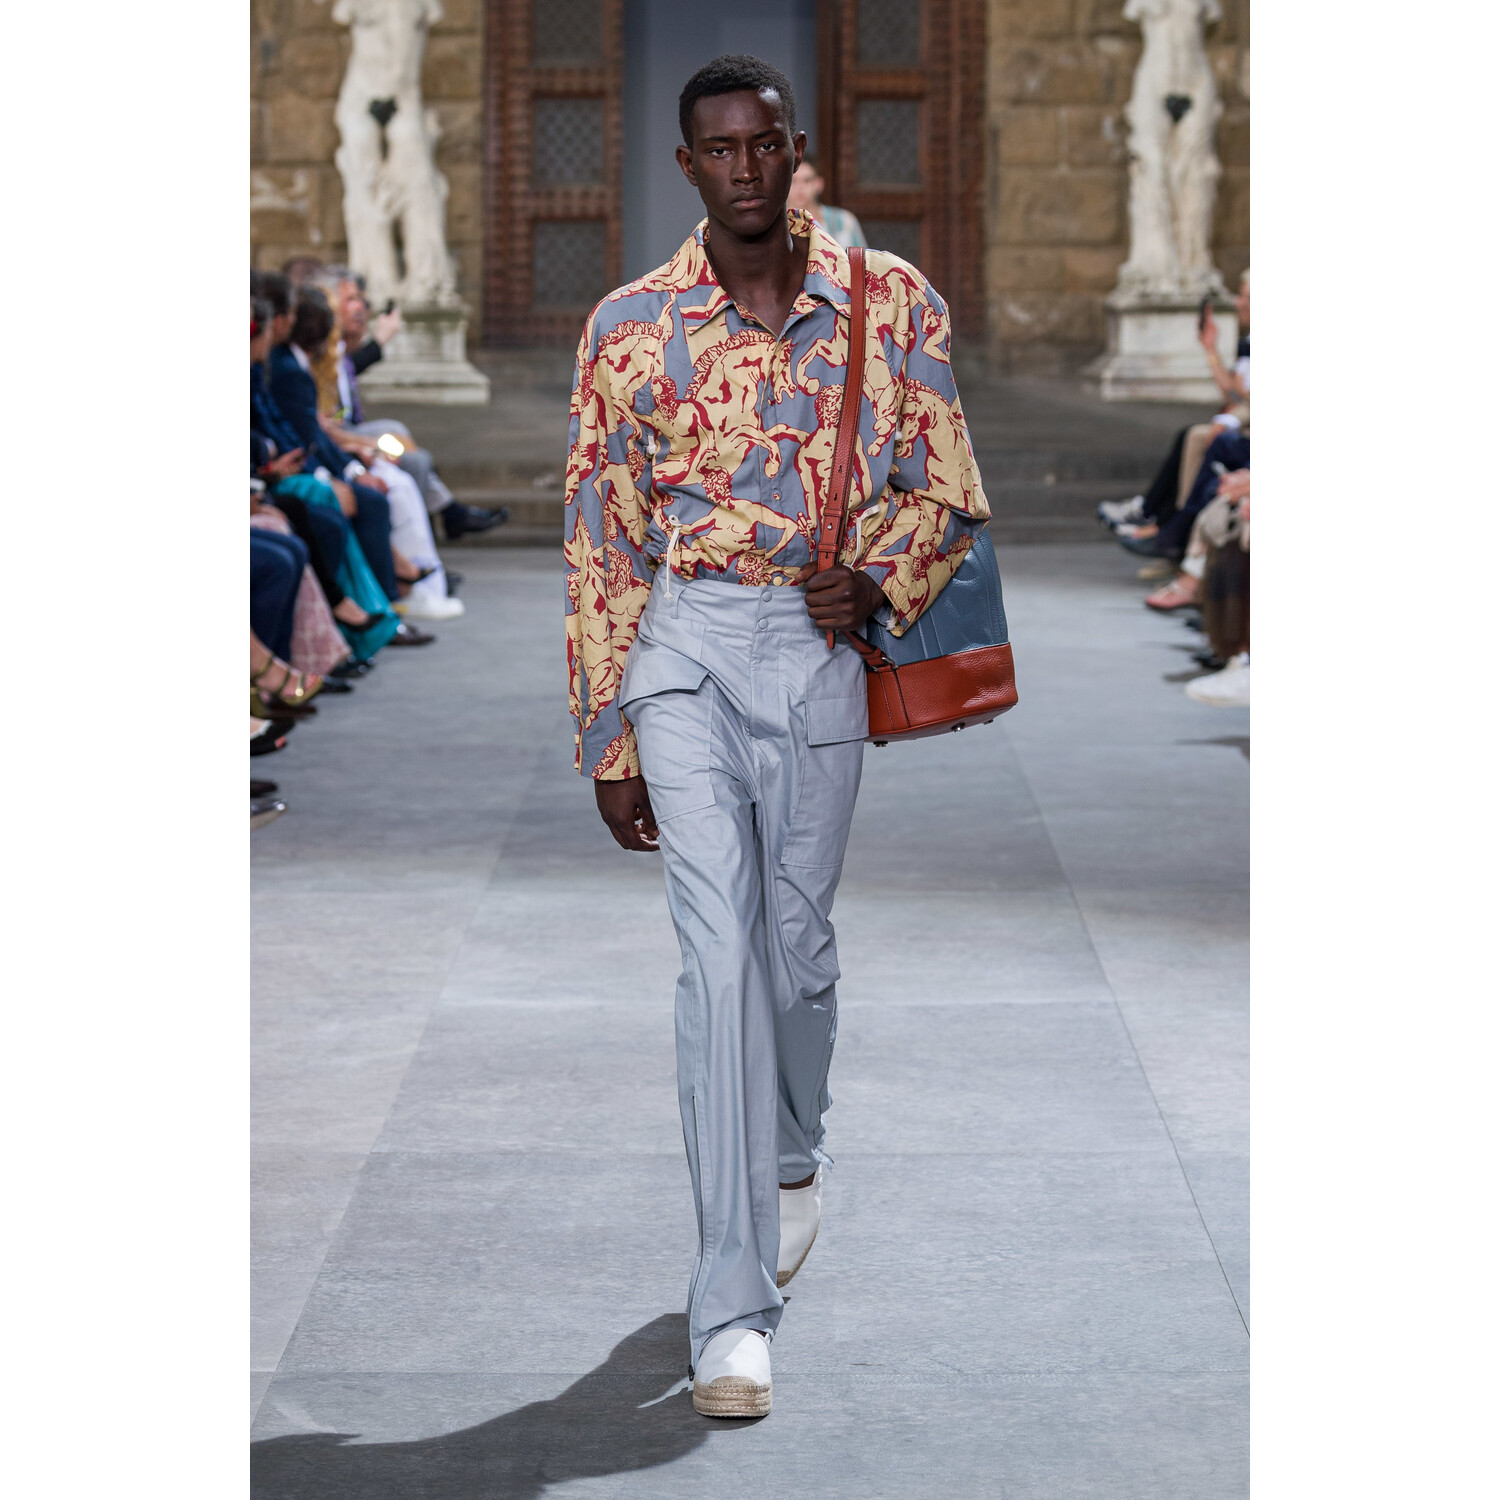 Фото Salvatore Ferragamo Spring 2020 Menswear Collection / Salvatore Ferragamo весна- лето 2020 / Неделя моды: Pitti Uomo